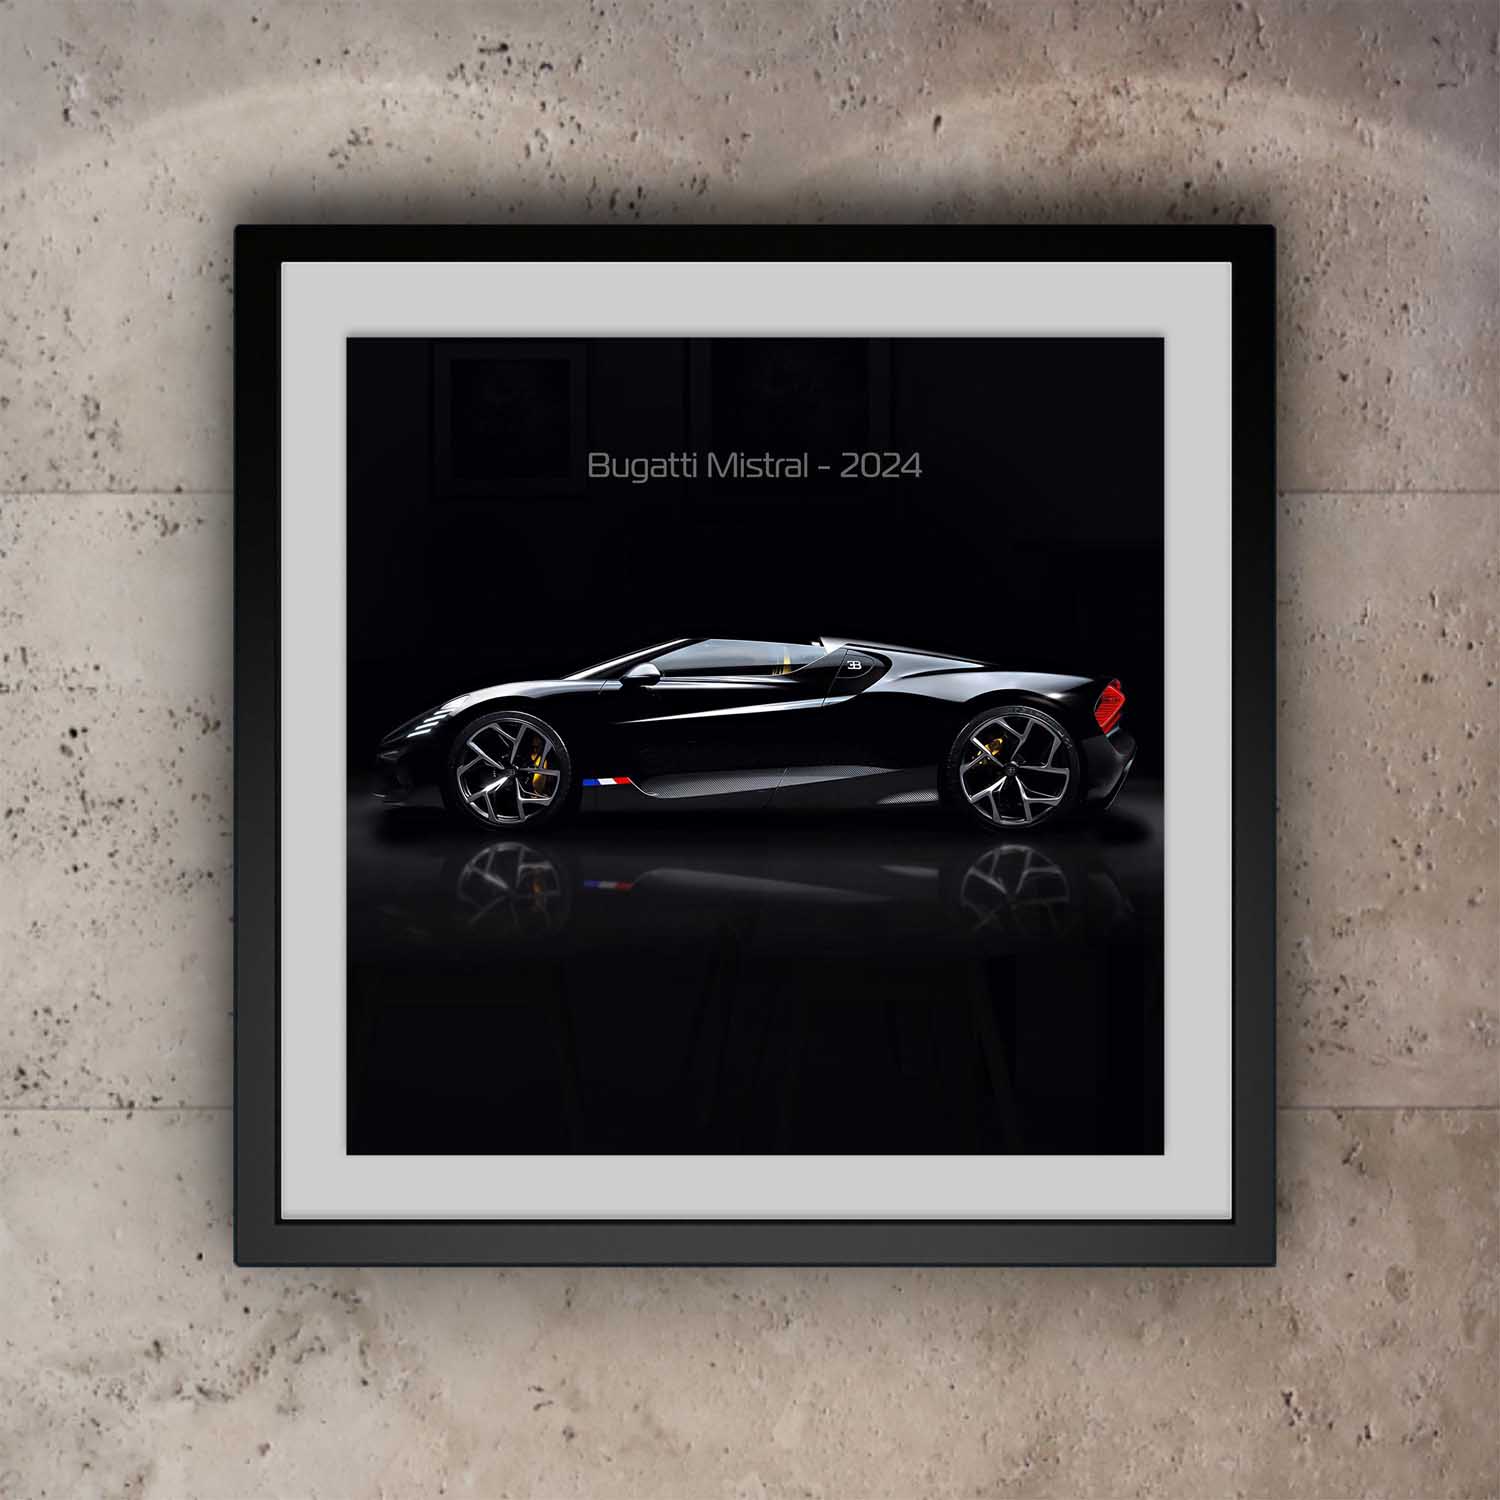 Bugatti Mistral Wall Art - Side